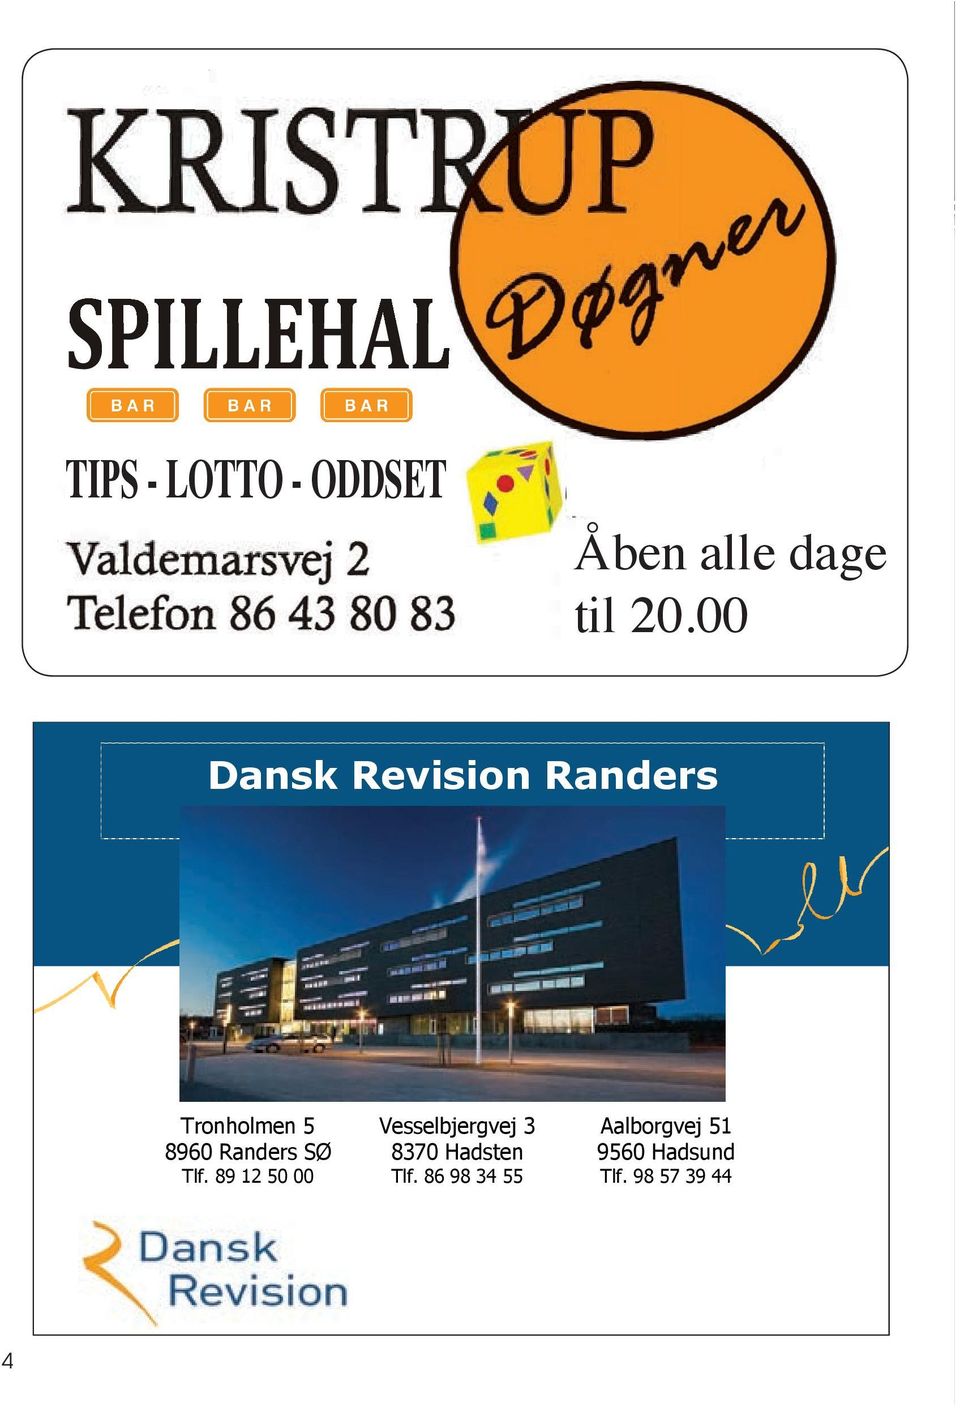 00 Dansk Revision Randers Tronholmen 5 Vesselbjergvej 3